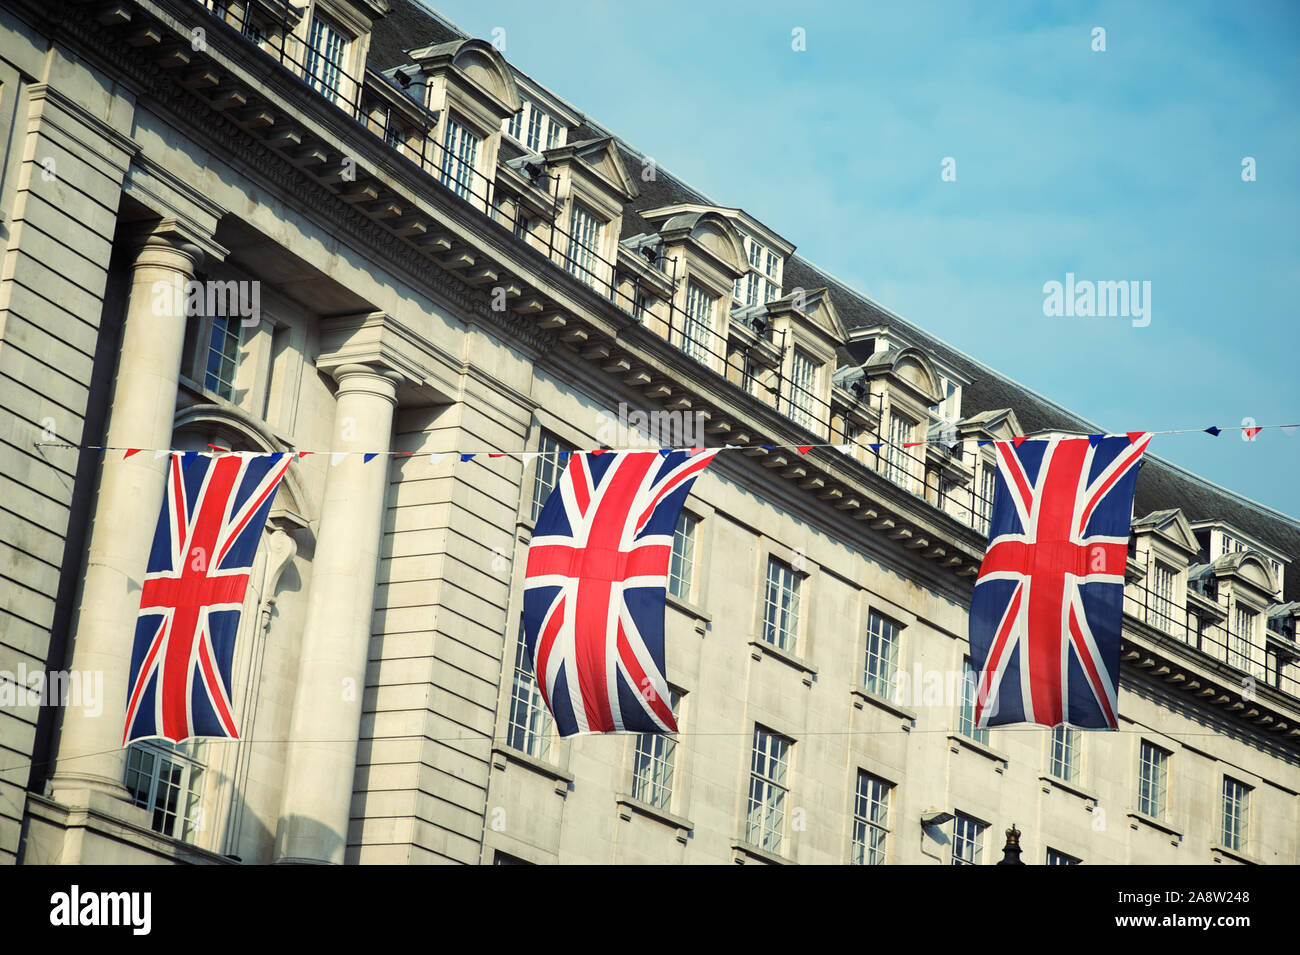 Union Jack flag decorations strung above the streets of London, UK under soft blue sky Stock Photo